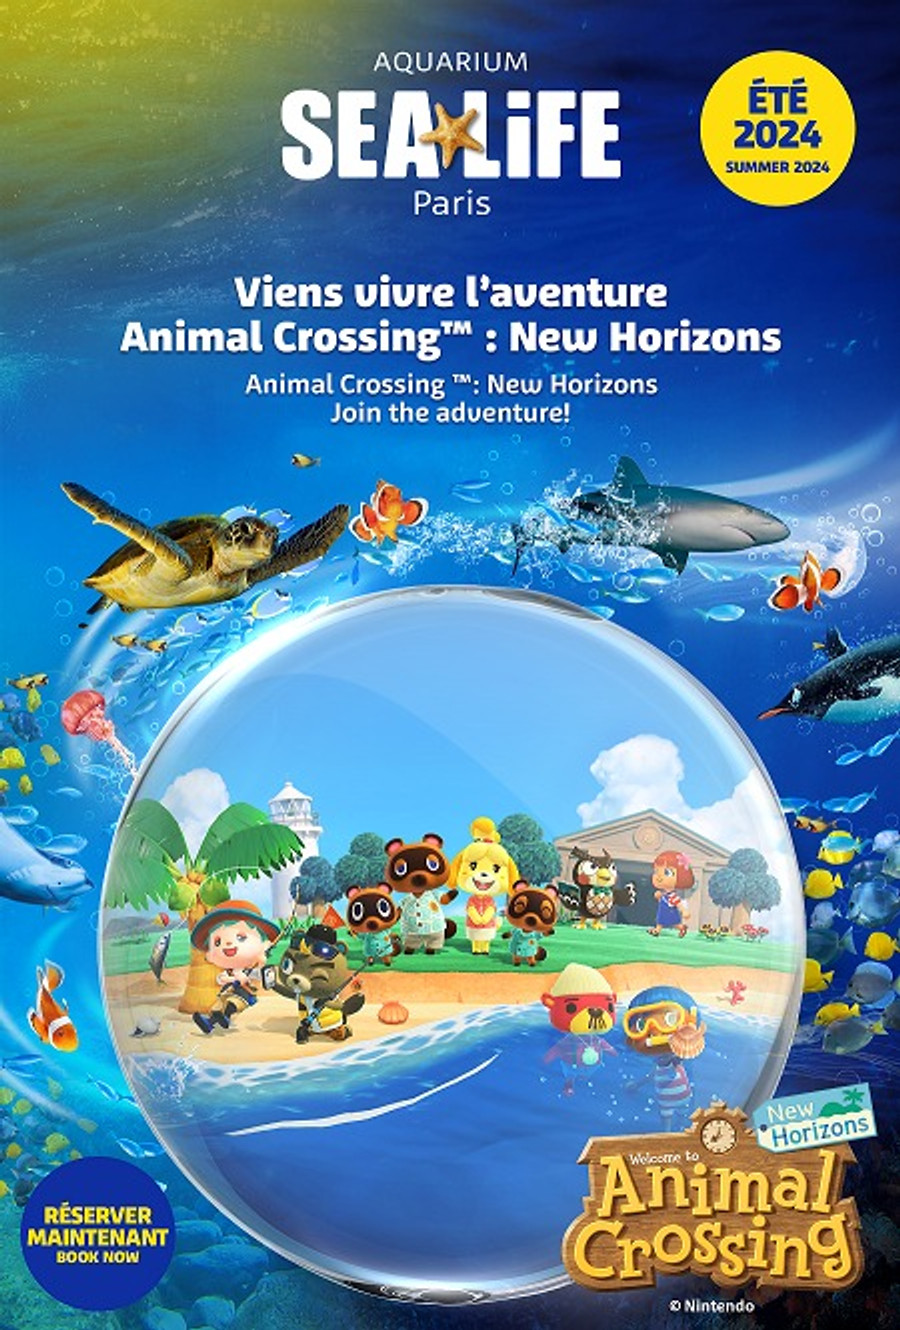 animal-crossing-sea-life-aquarium-experience-expo-immersive